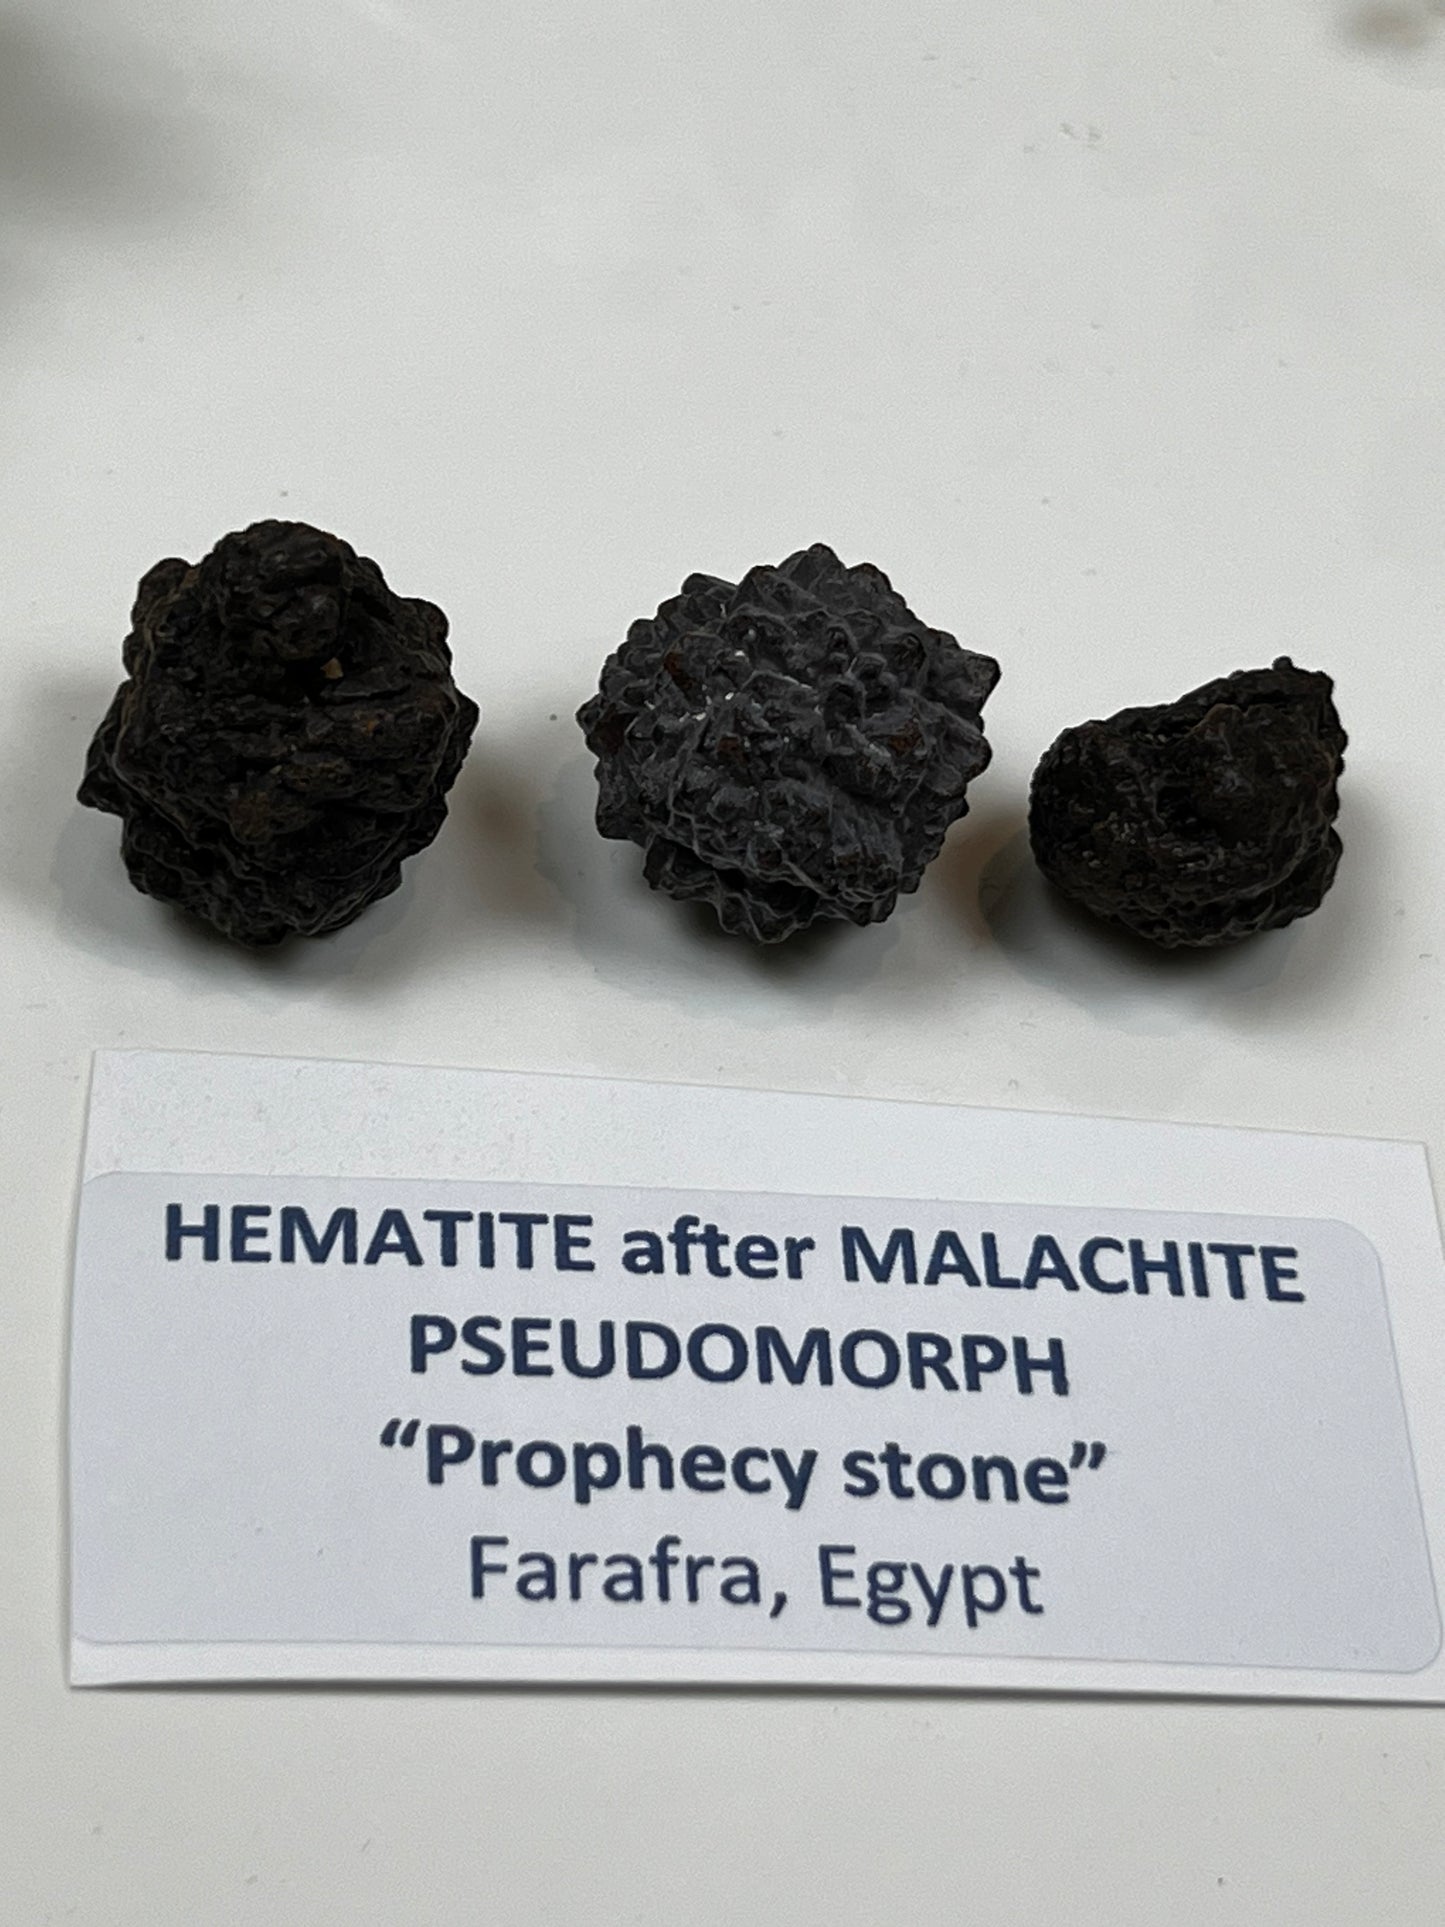 Prophecy stone Hematite after Malachite